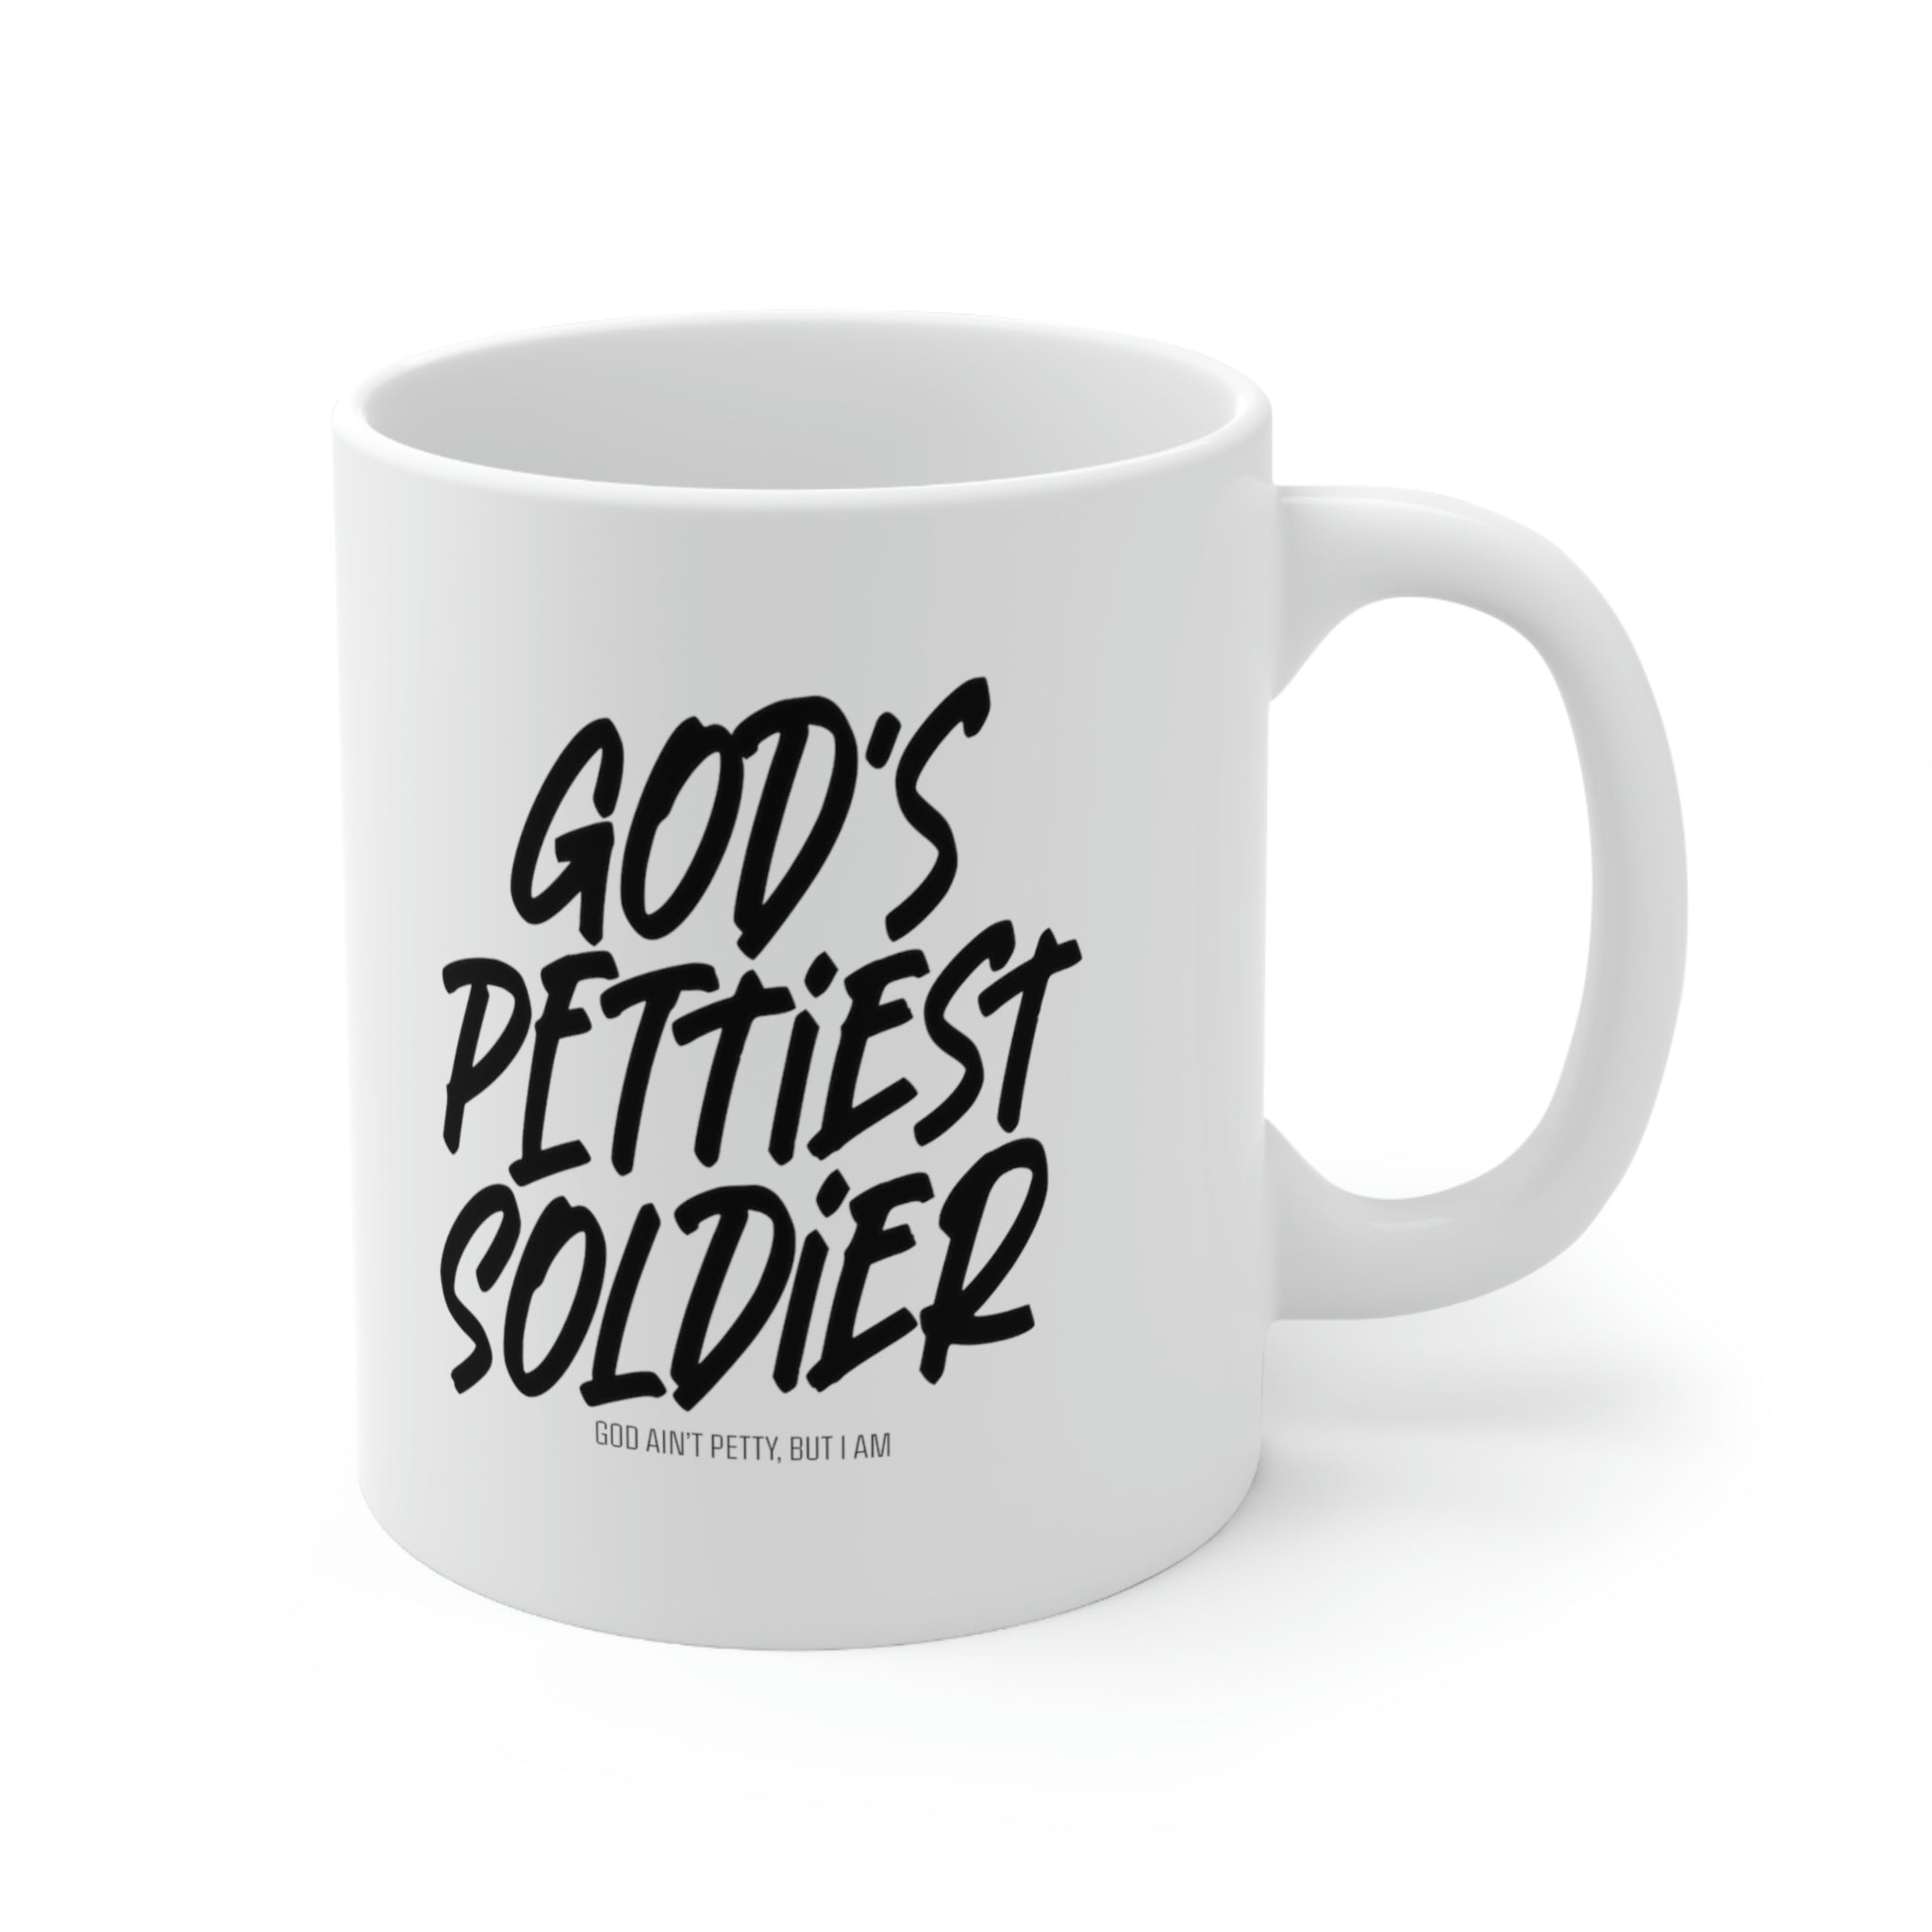 God's Pettiest Soldier Mug 11oz (White & Black)-Mug-The Original God Ain't Petty But I Am